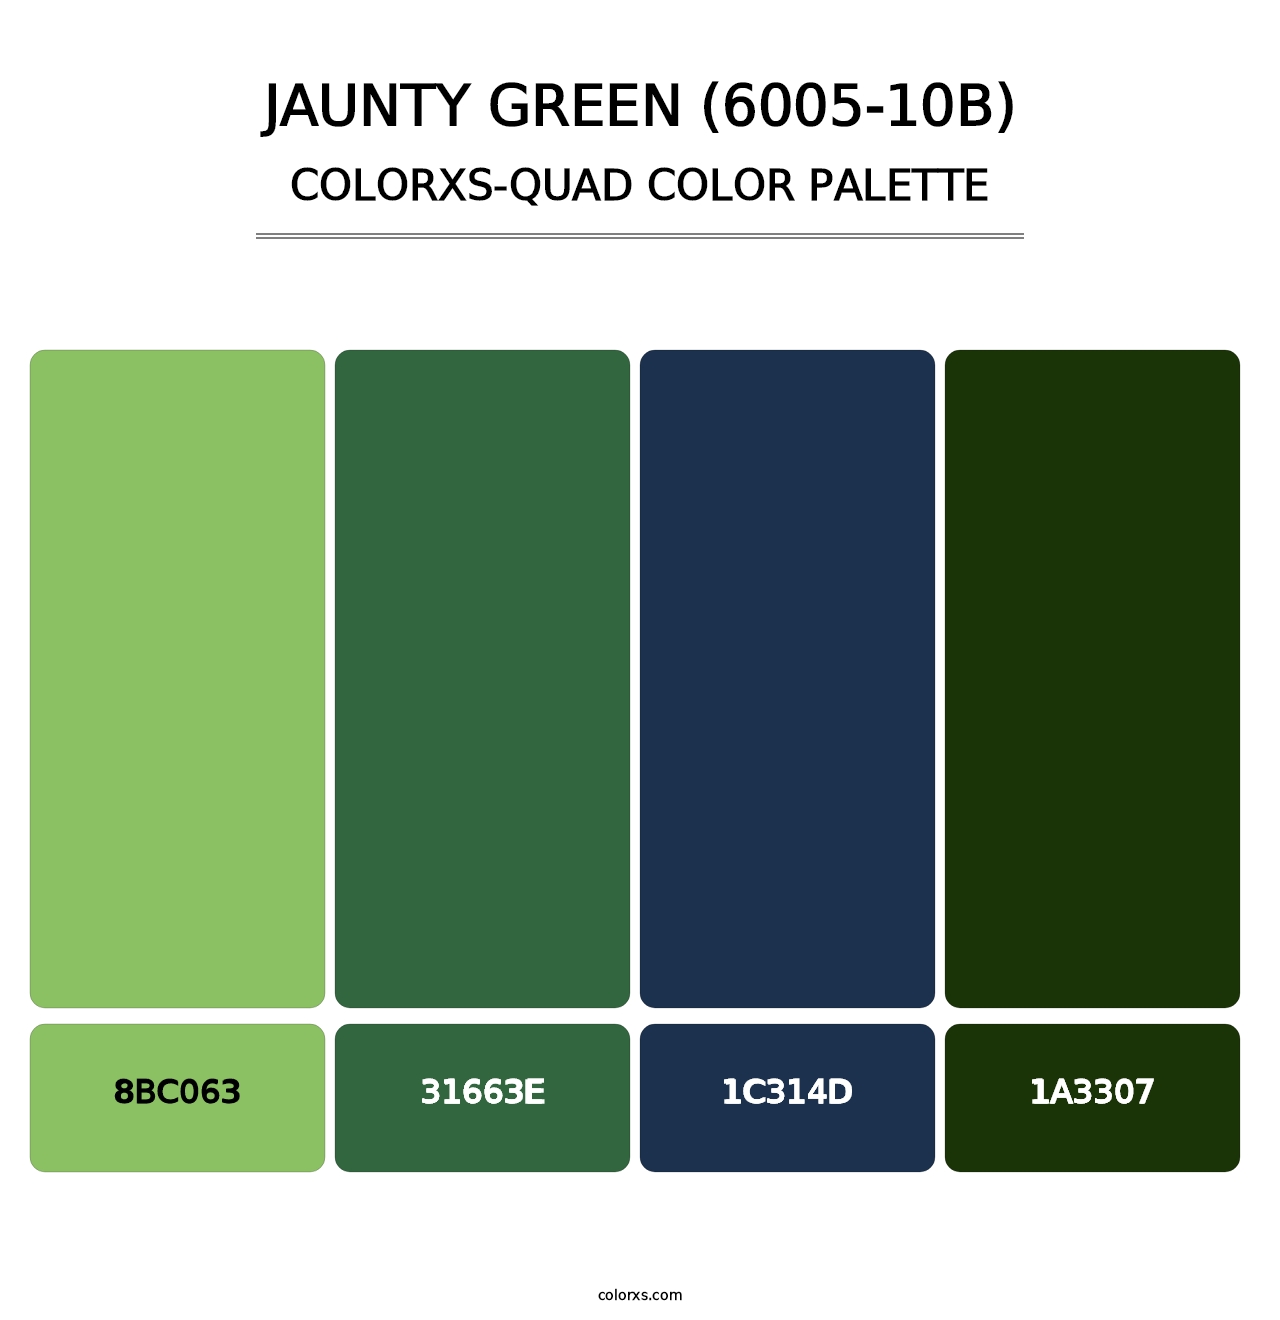 Jaunty Green (6005-10B) - Colorxs Quad Palette